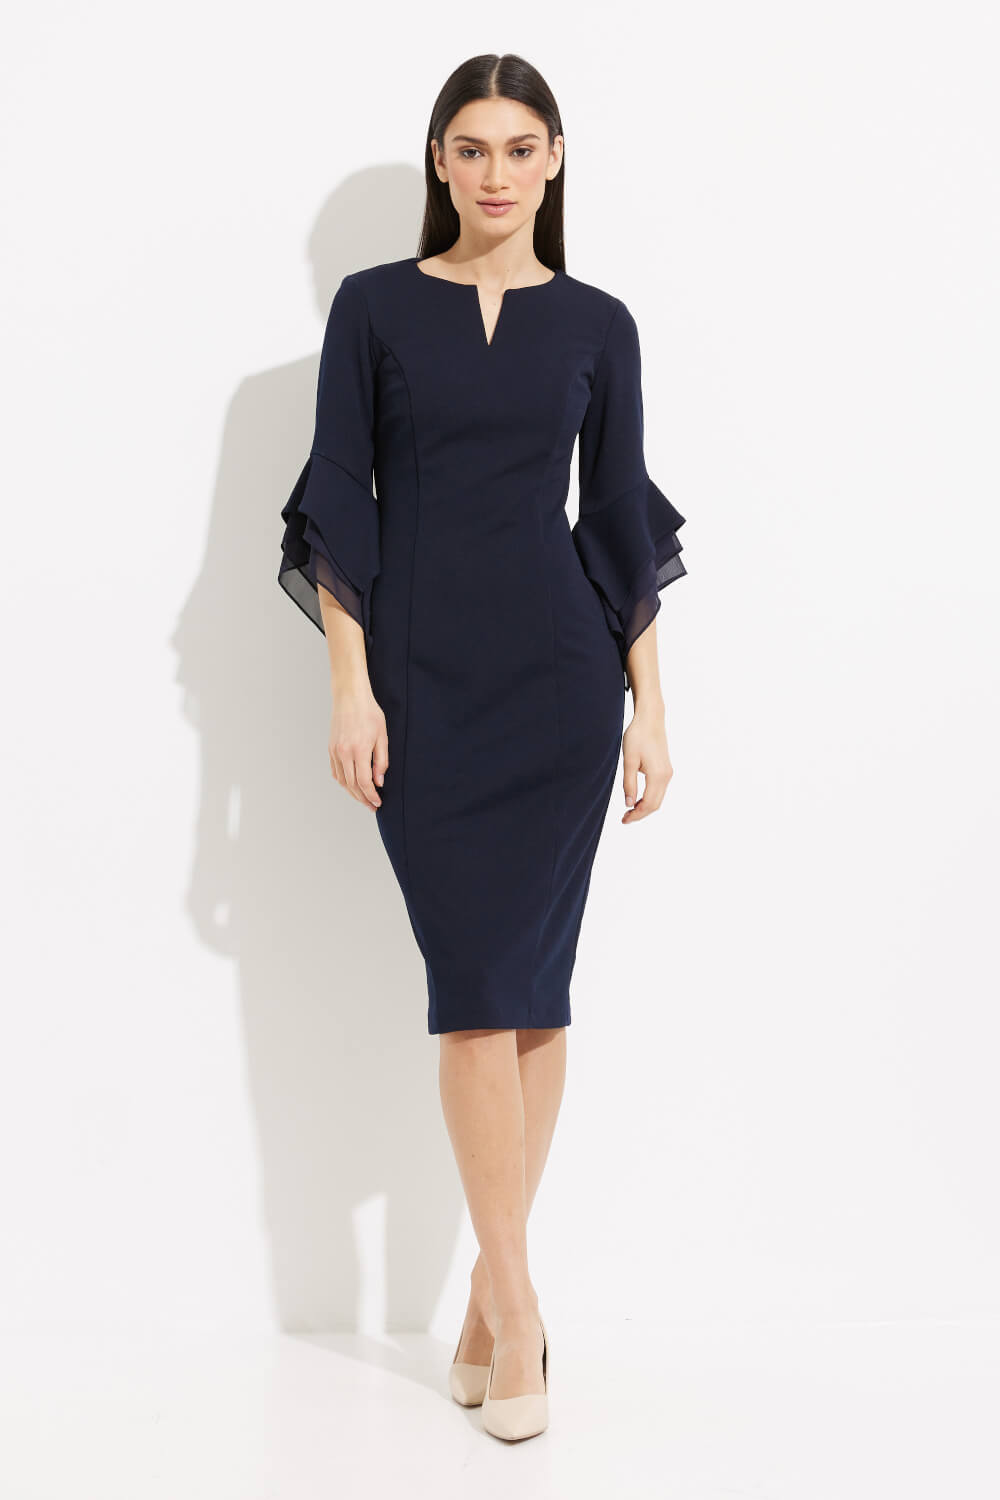 Sheer Sleeve Dress Style 233771. Midnight Blue